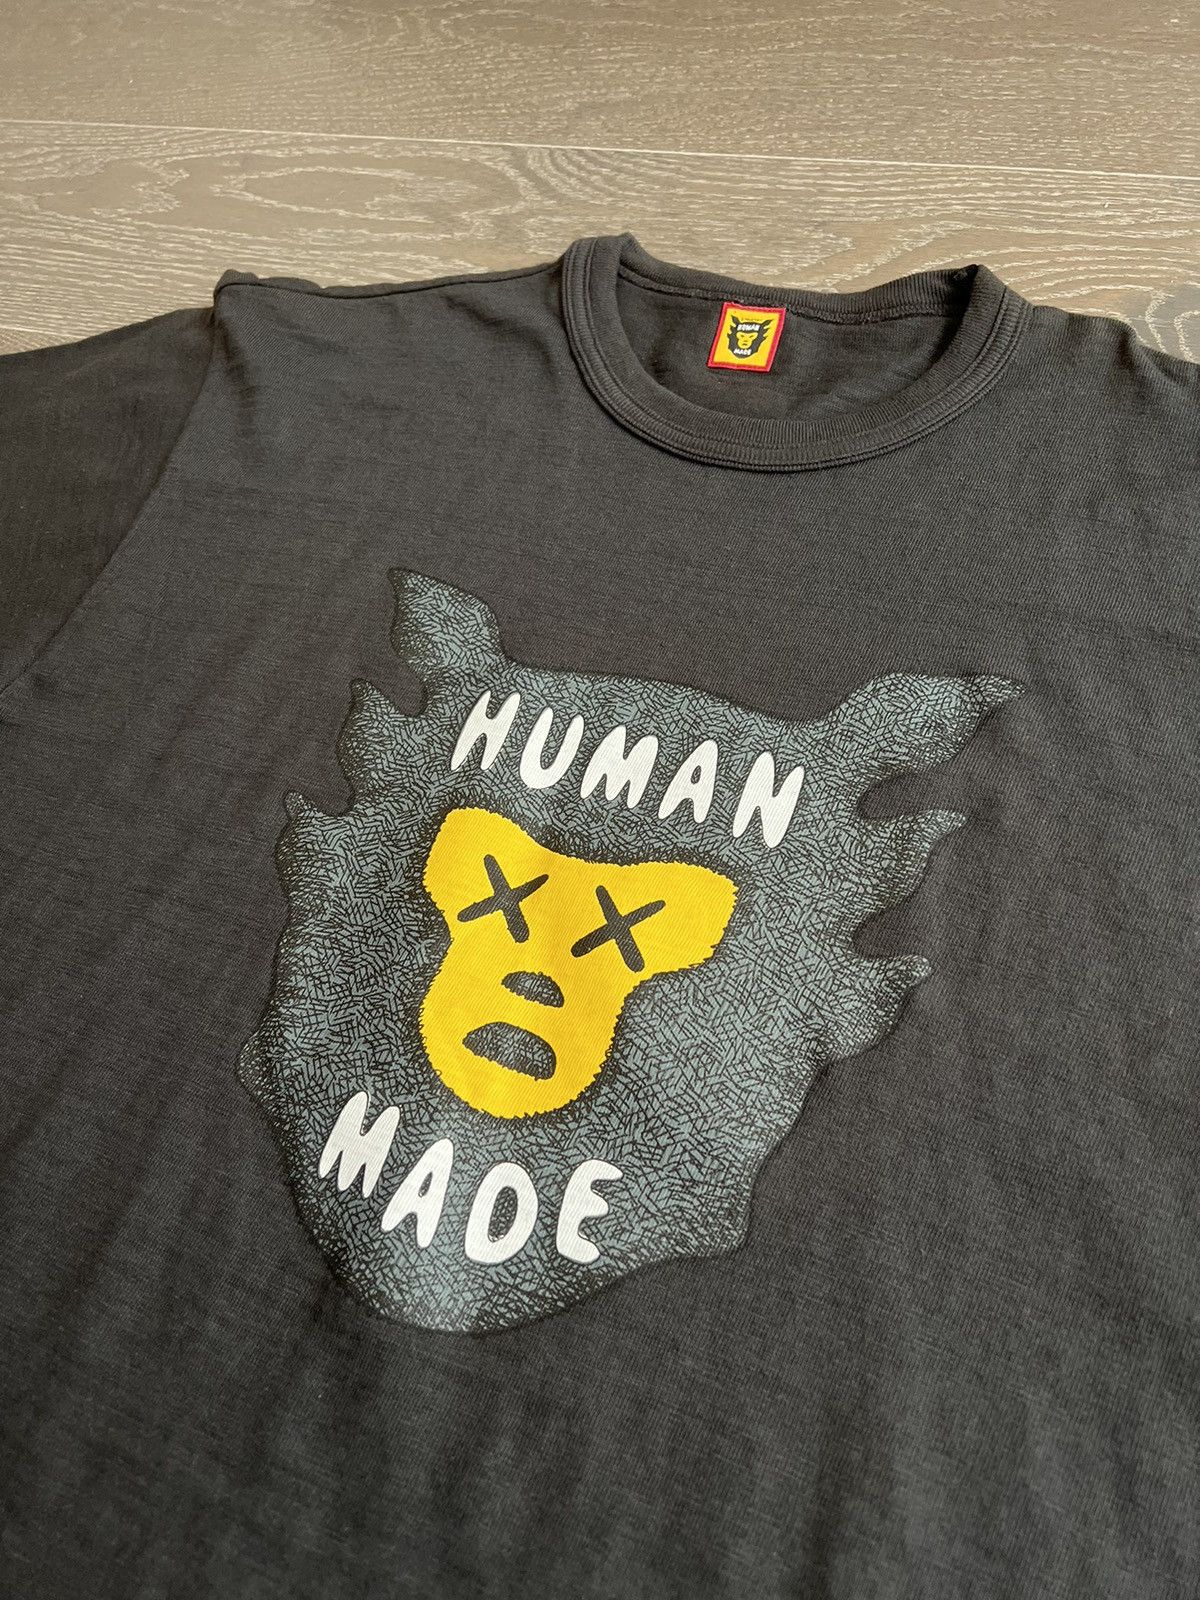 Human Made KAWS Graphic T-shirt | Grailed